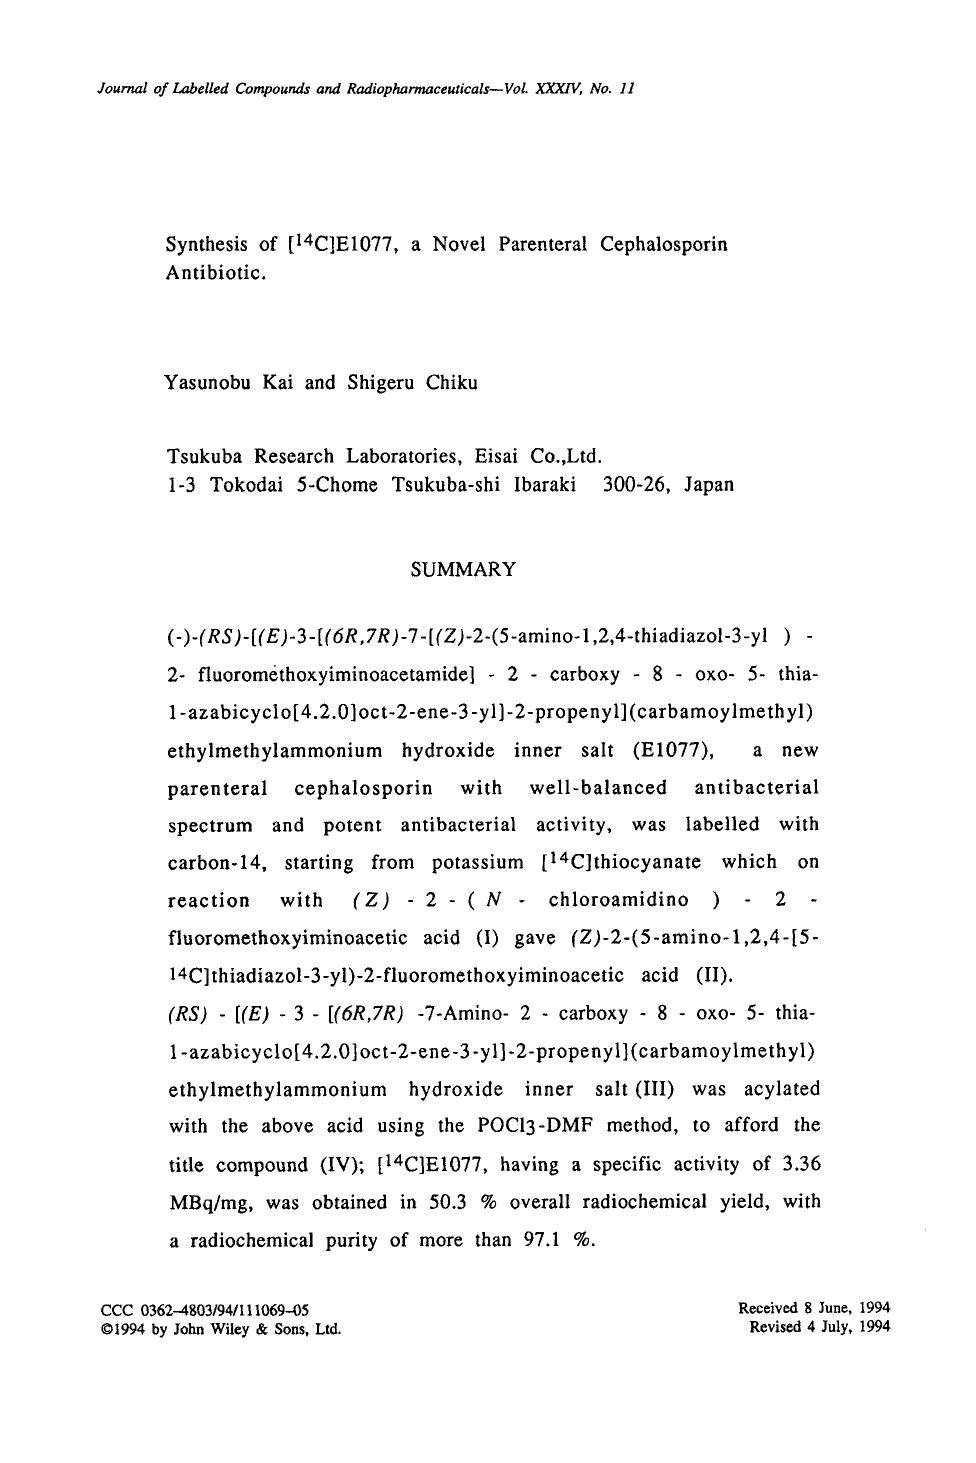 Synthesis of [14C]E1077, a novel parenteral cephalosporin antibiotic by Unknown